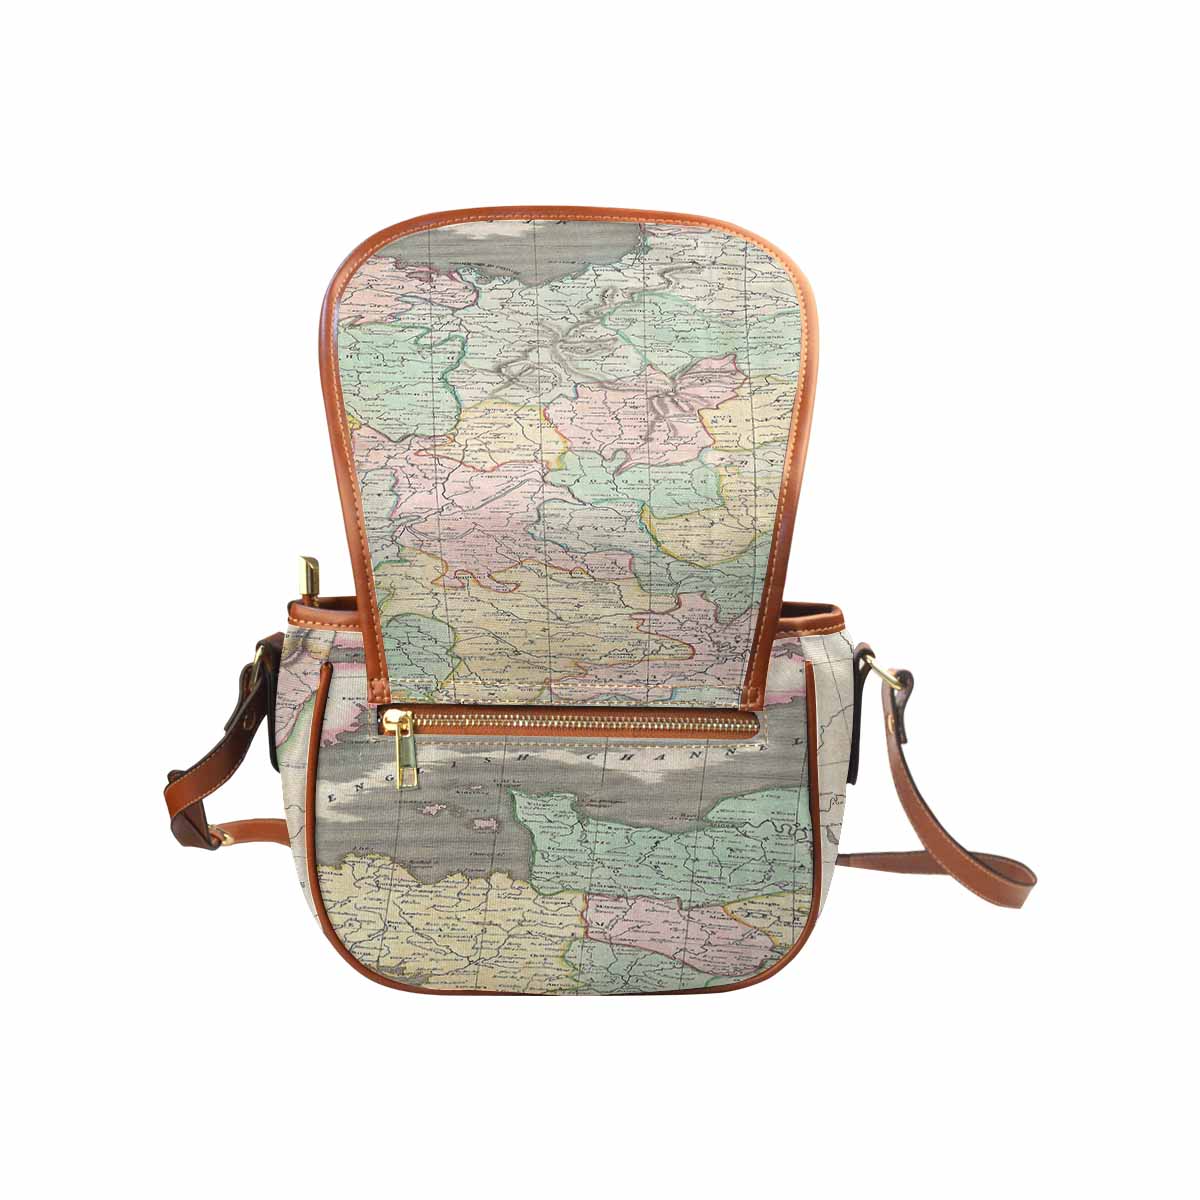 Antique Map design Handbag, saddle bag, Design 39